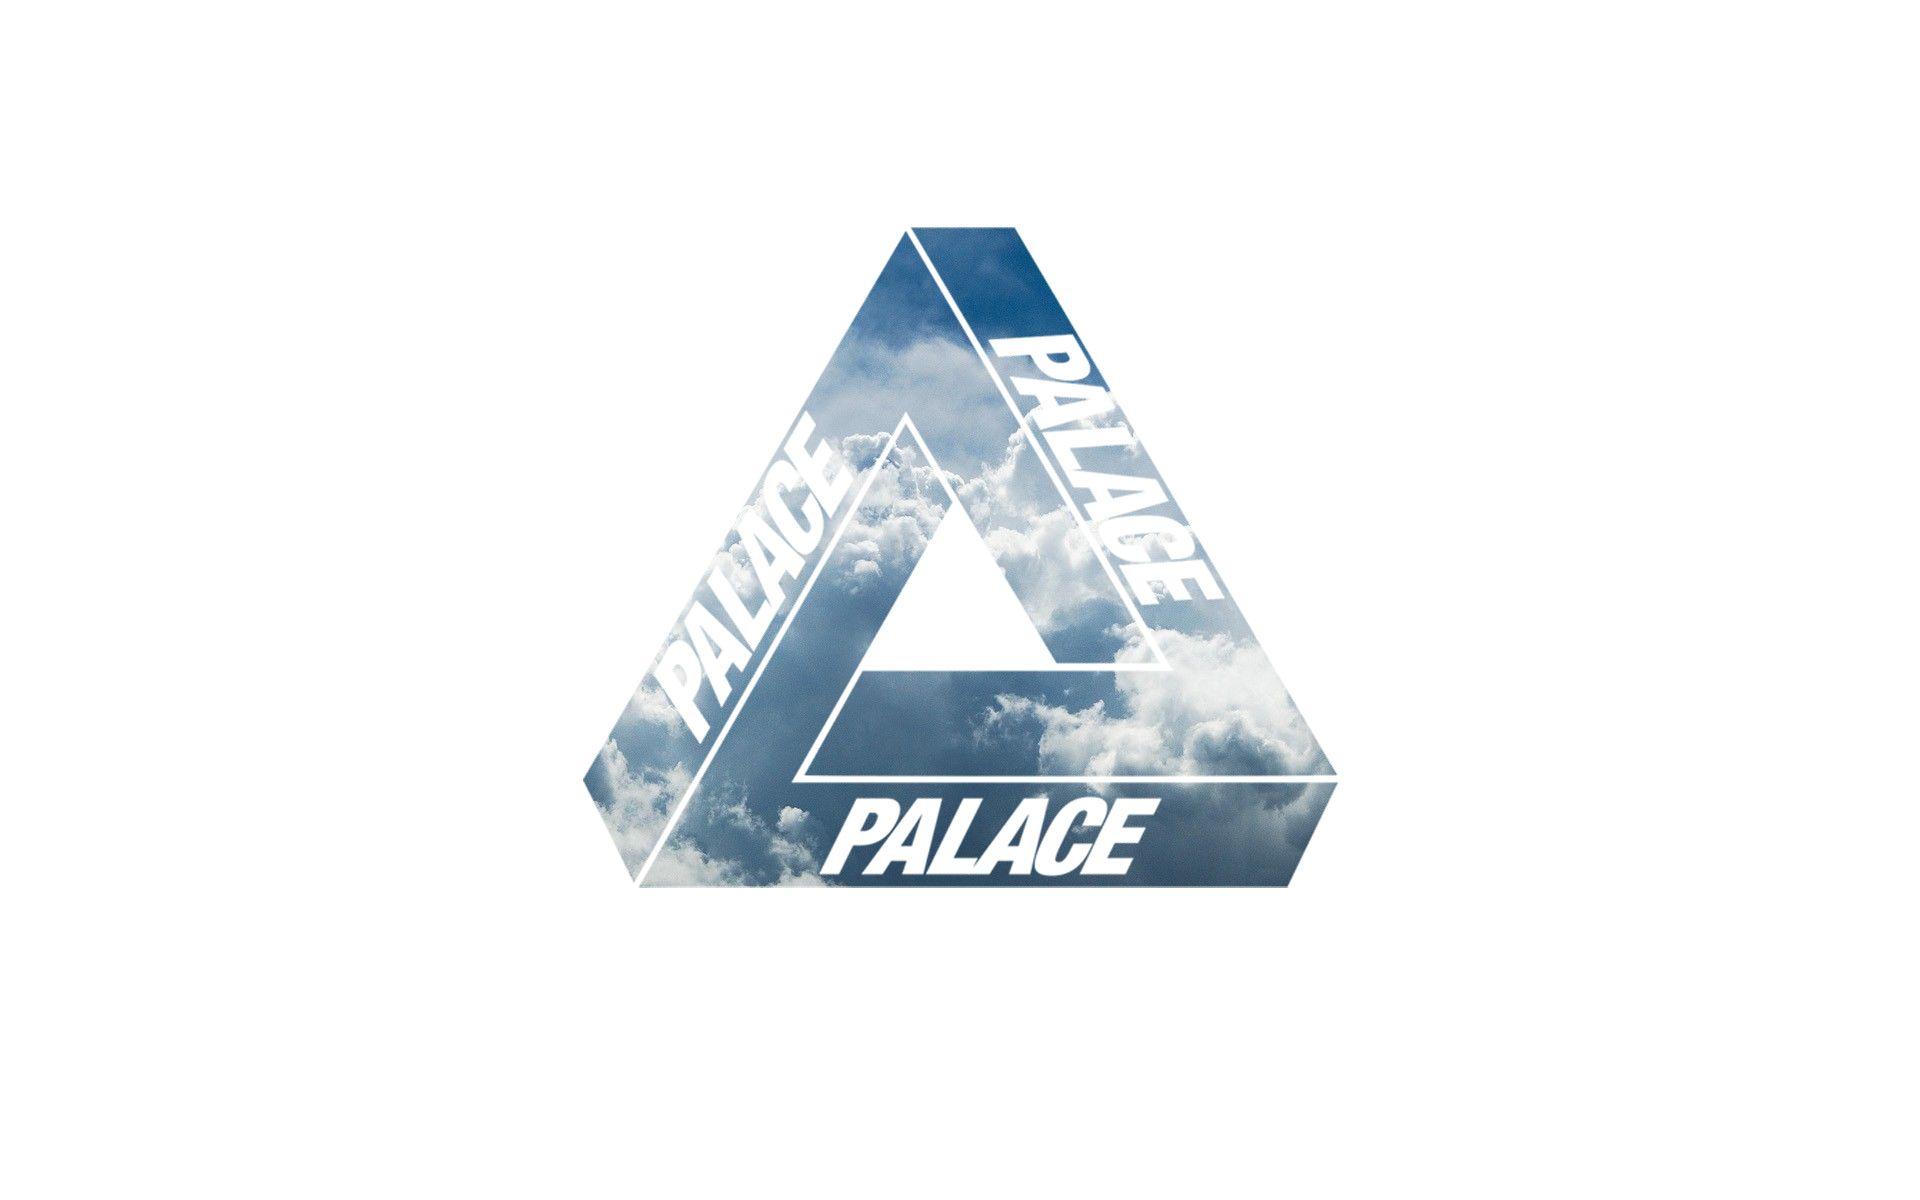 Palace Triangle Logo - Palace Wallpapers - Album on Imgur